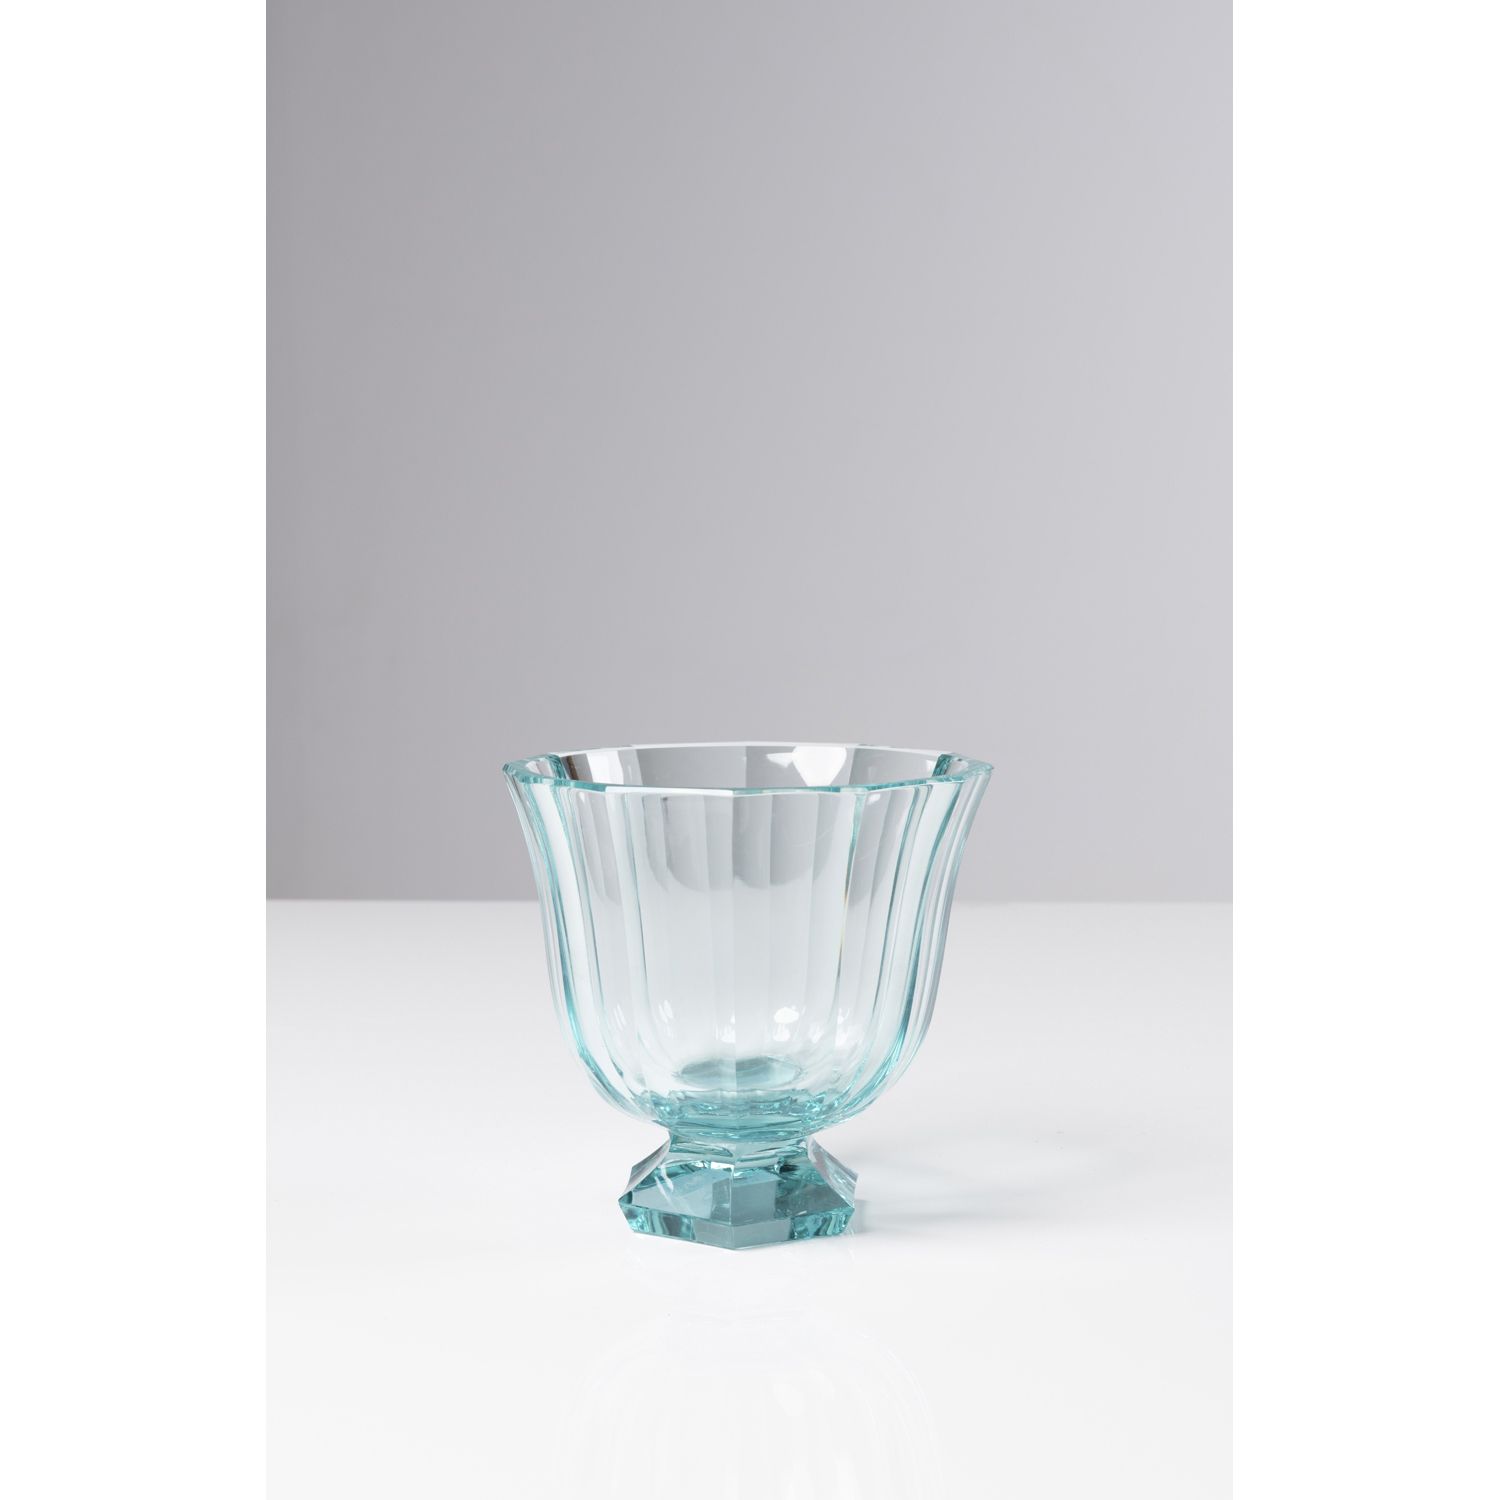 Null 捷克作品（20世纪

杯子，约1910年

玻璃

刻有 "Moser Karlovy Vary "的字样

直径15.5厘米